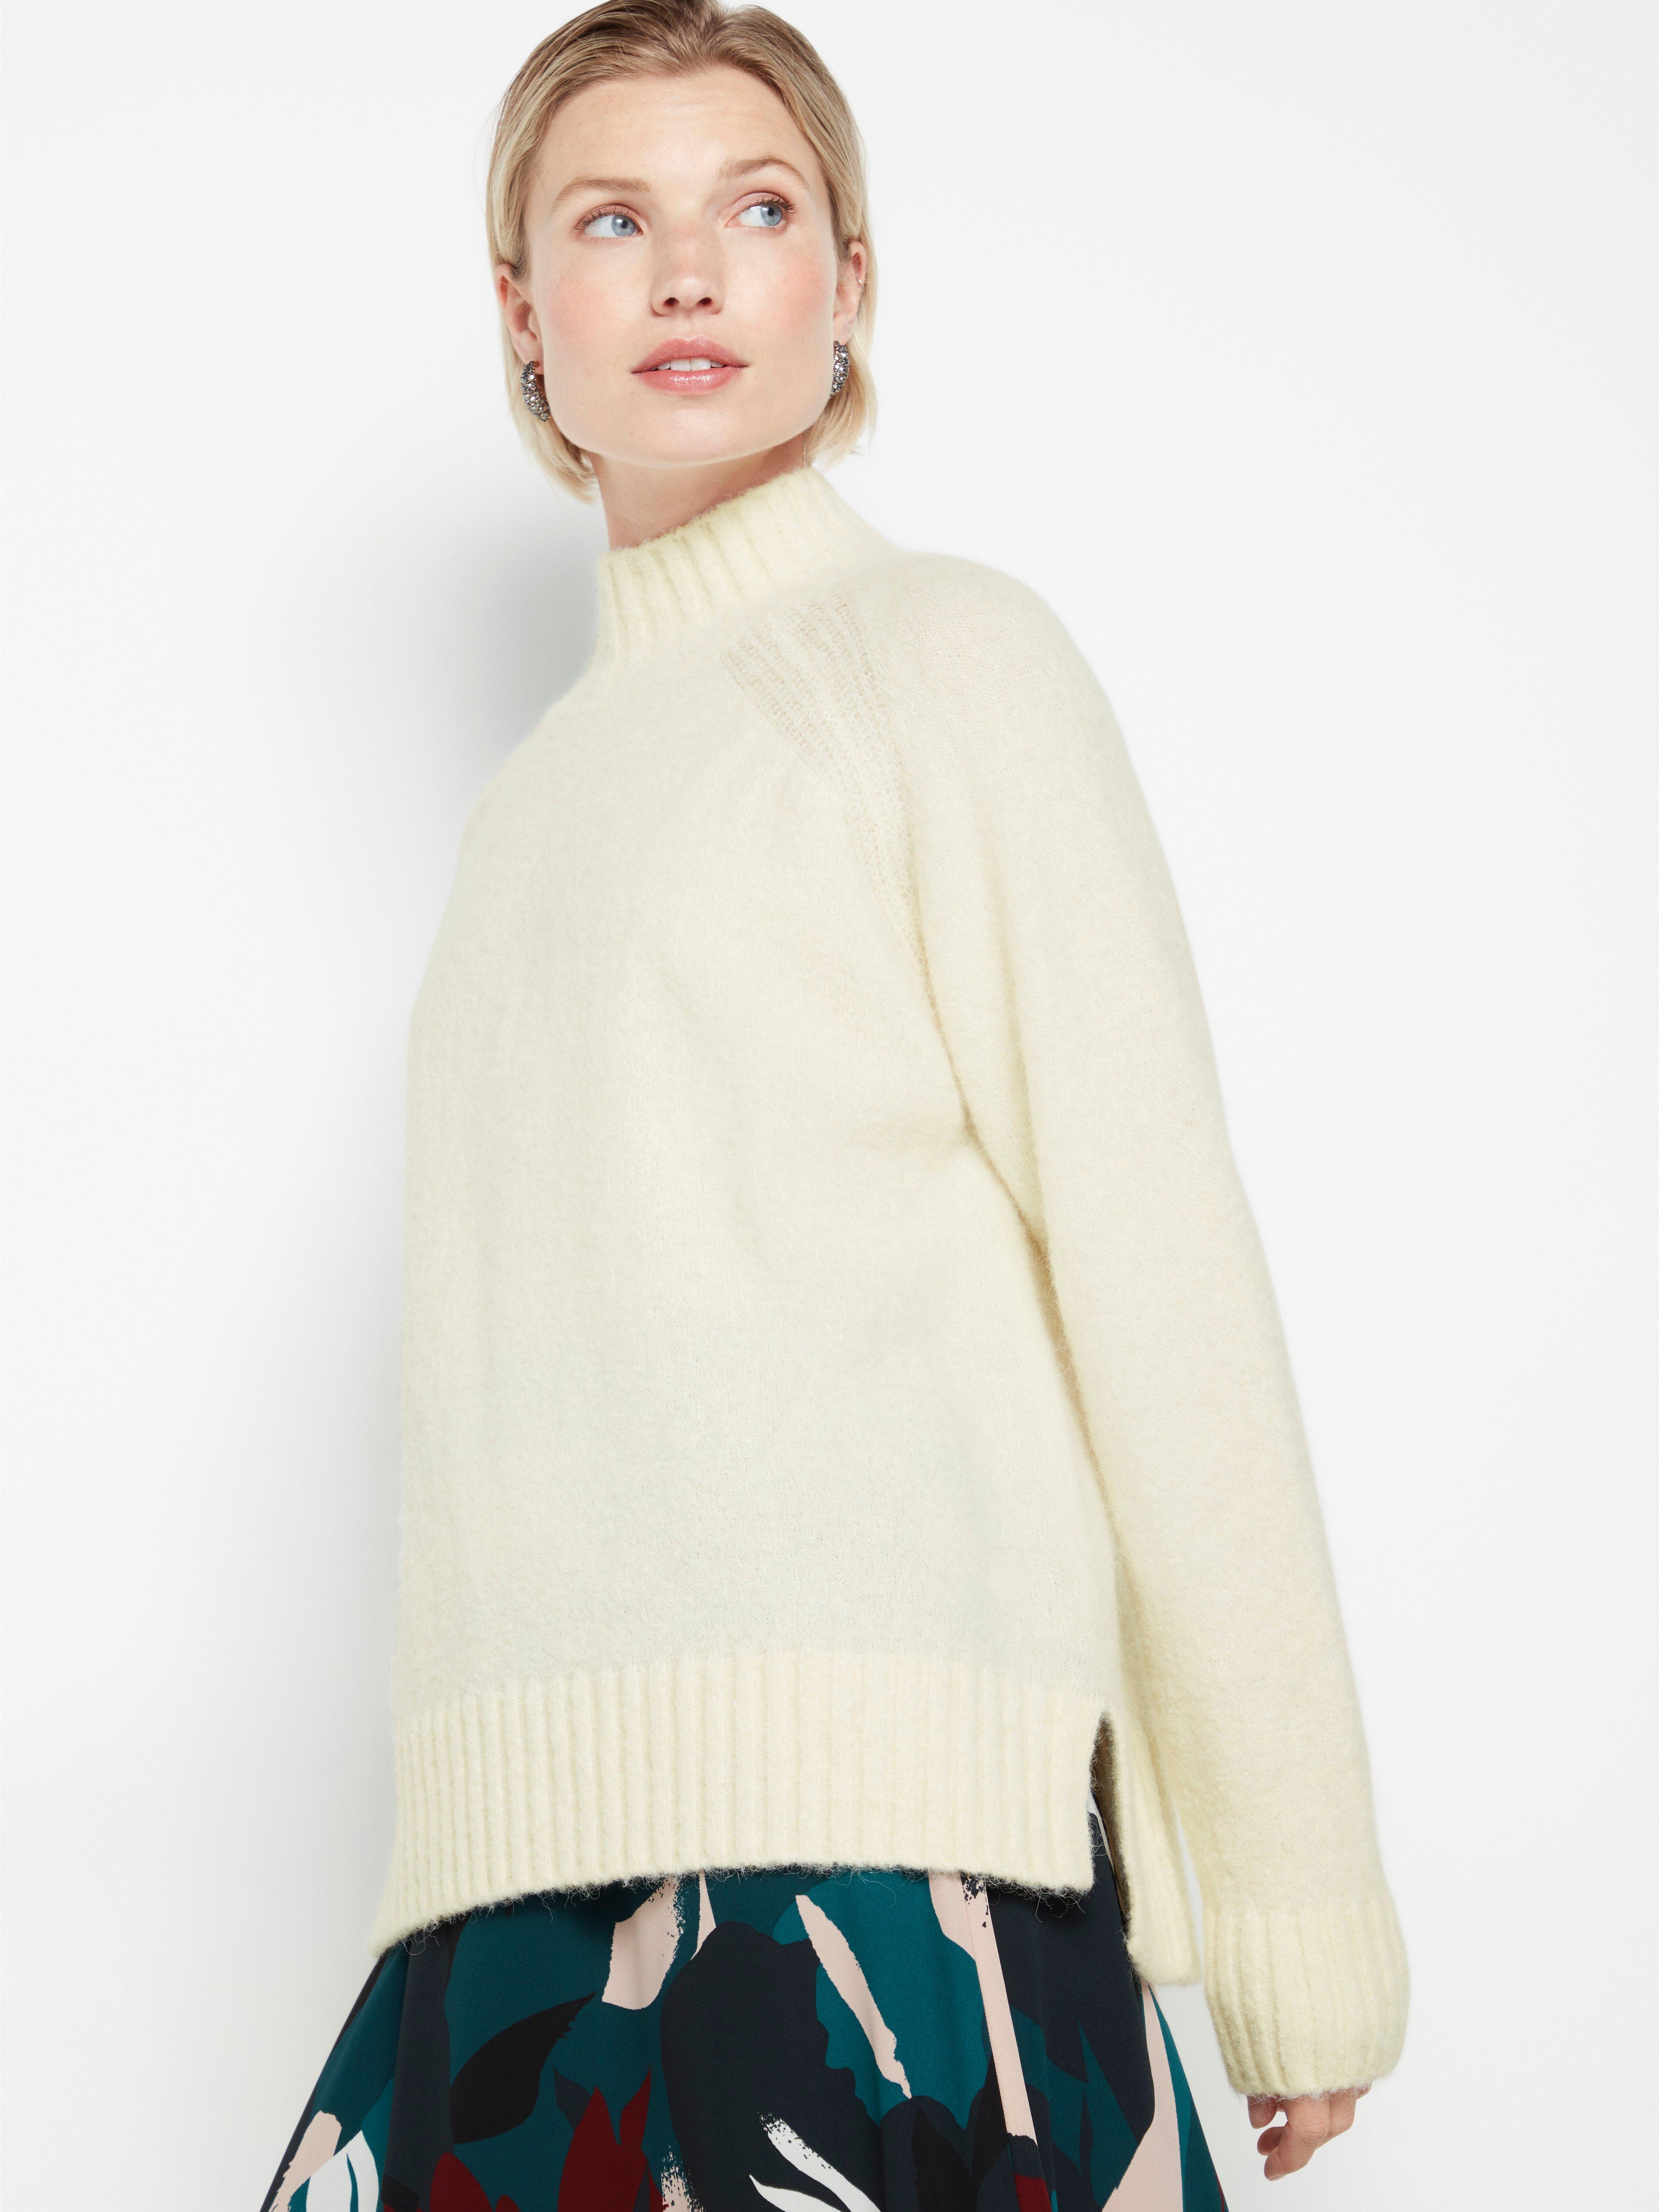 Knitted jumper in alpaca wool blend, Lindex Latvia